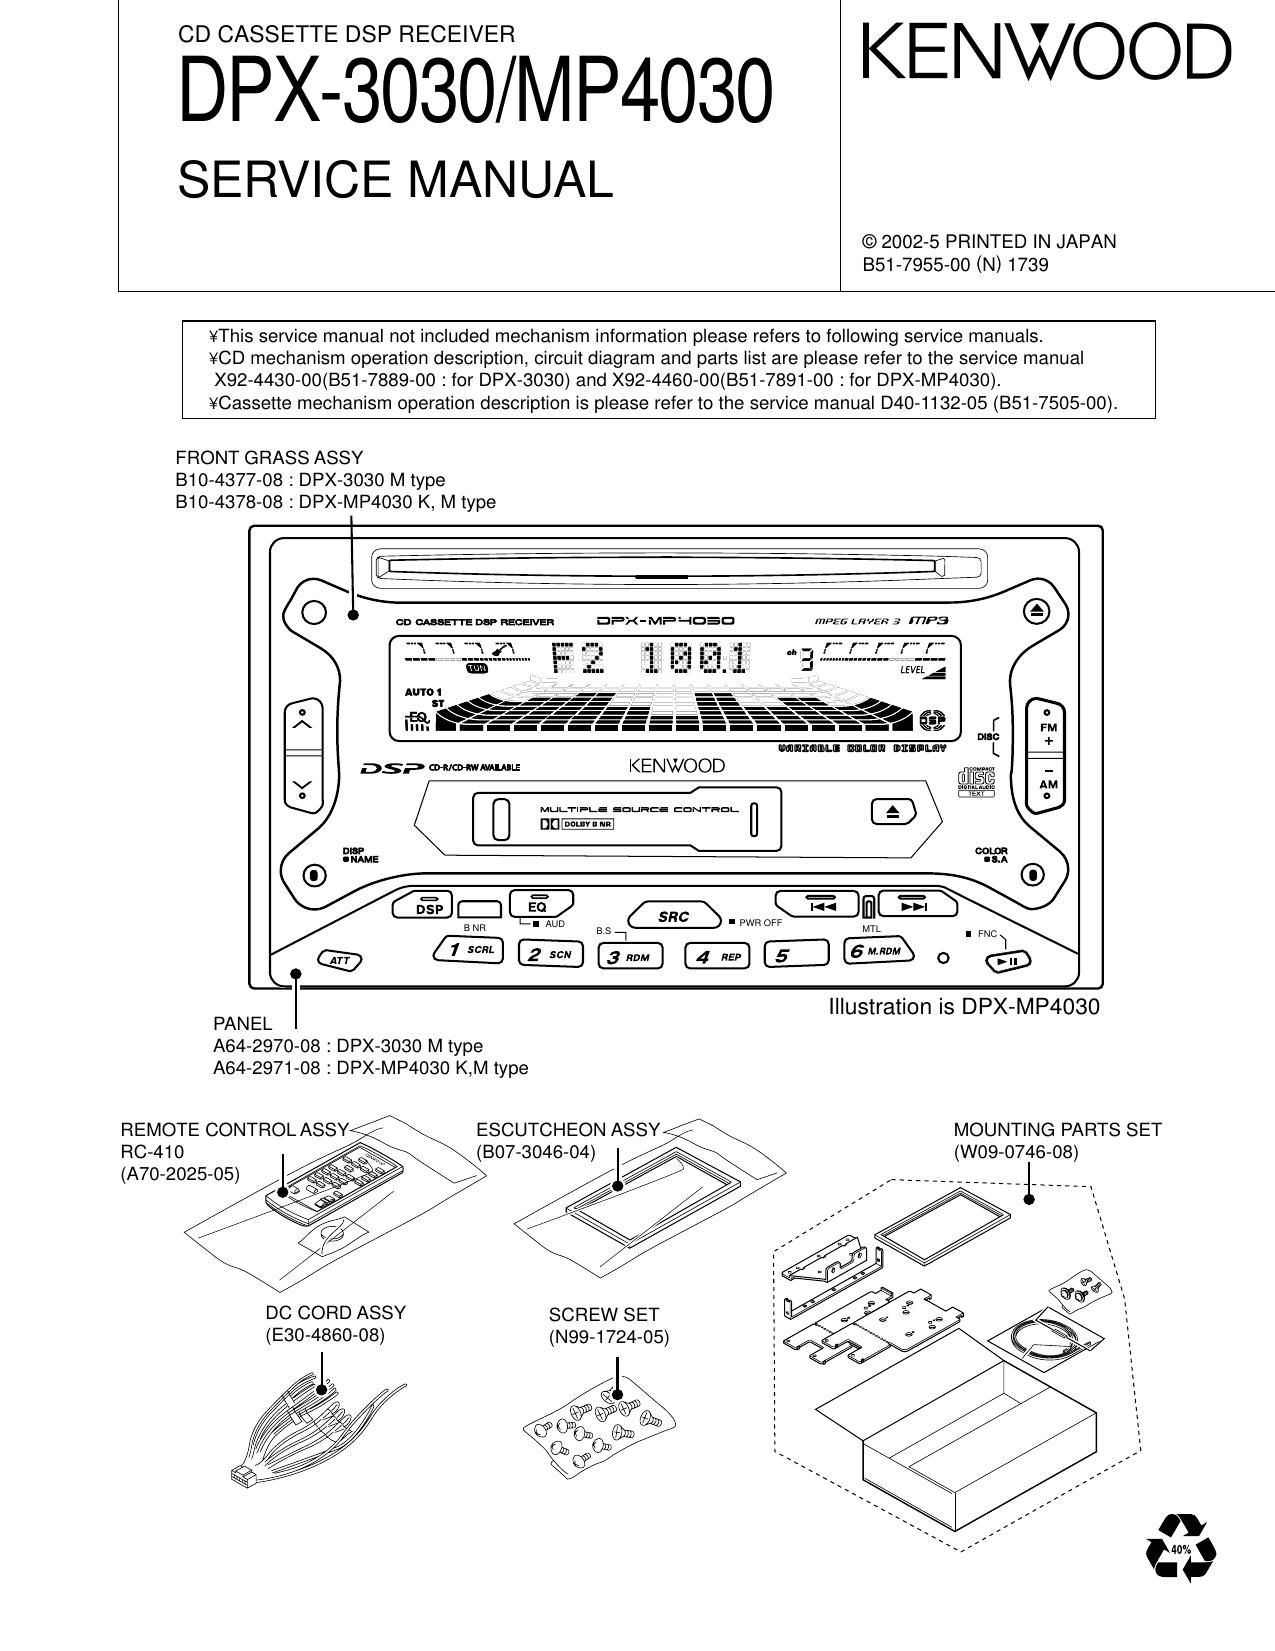 Kenwood DPX 3030 Service Manual